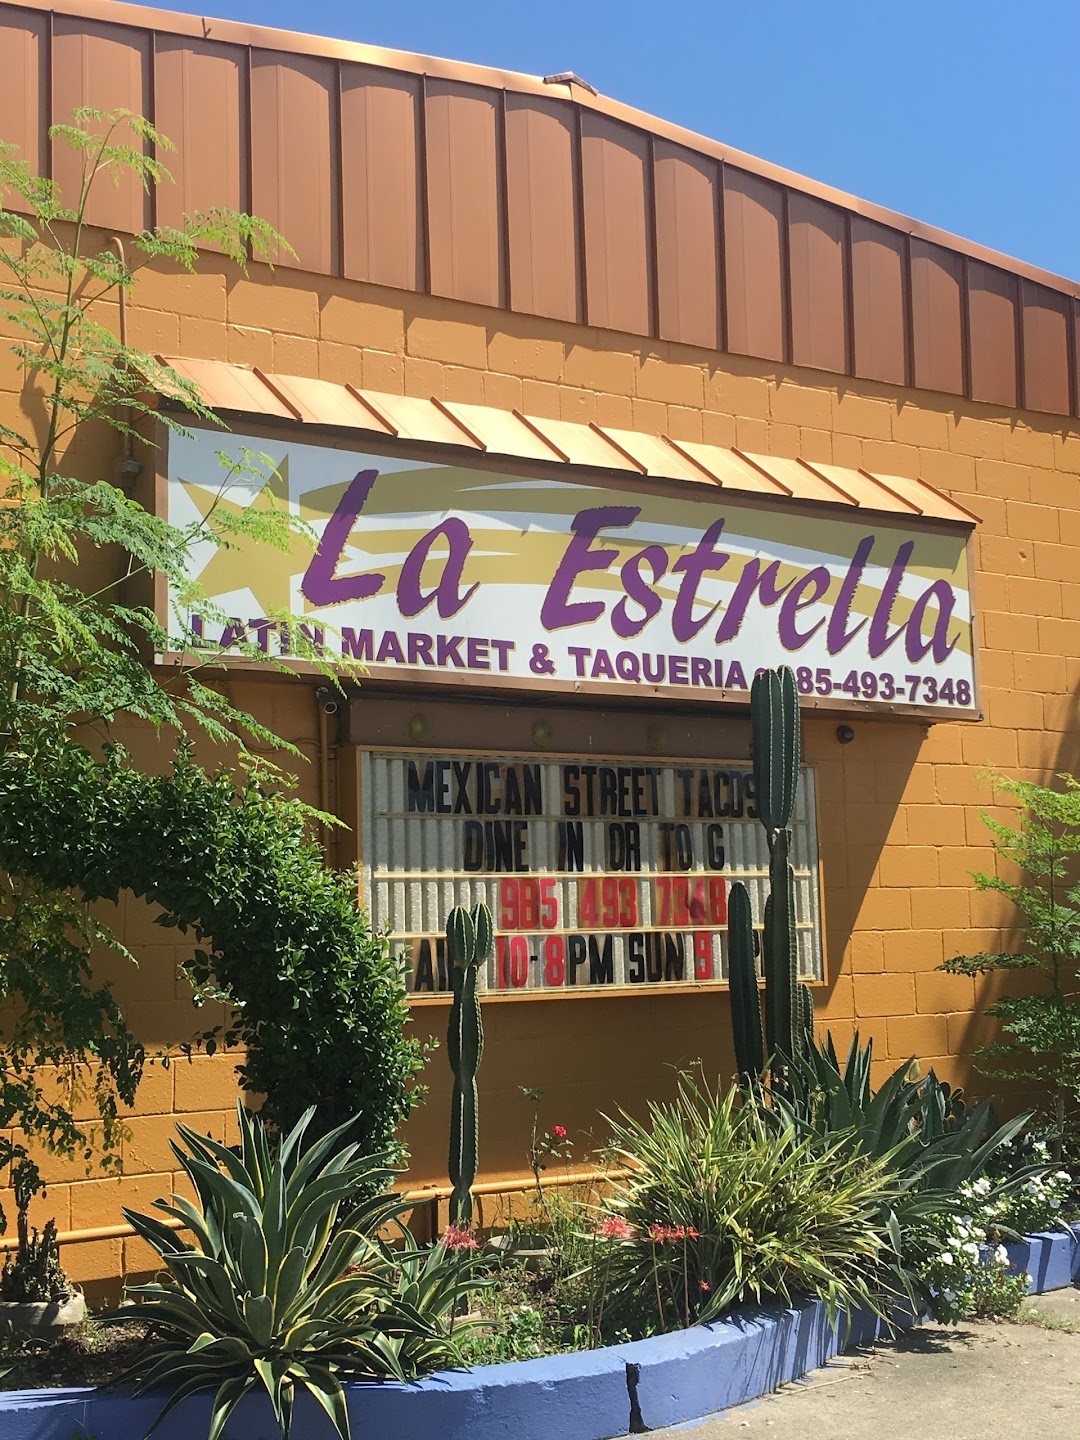 La Estrella Latin Market & Taqueria